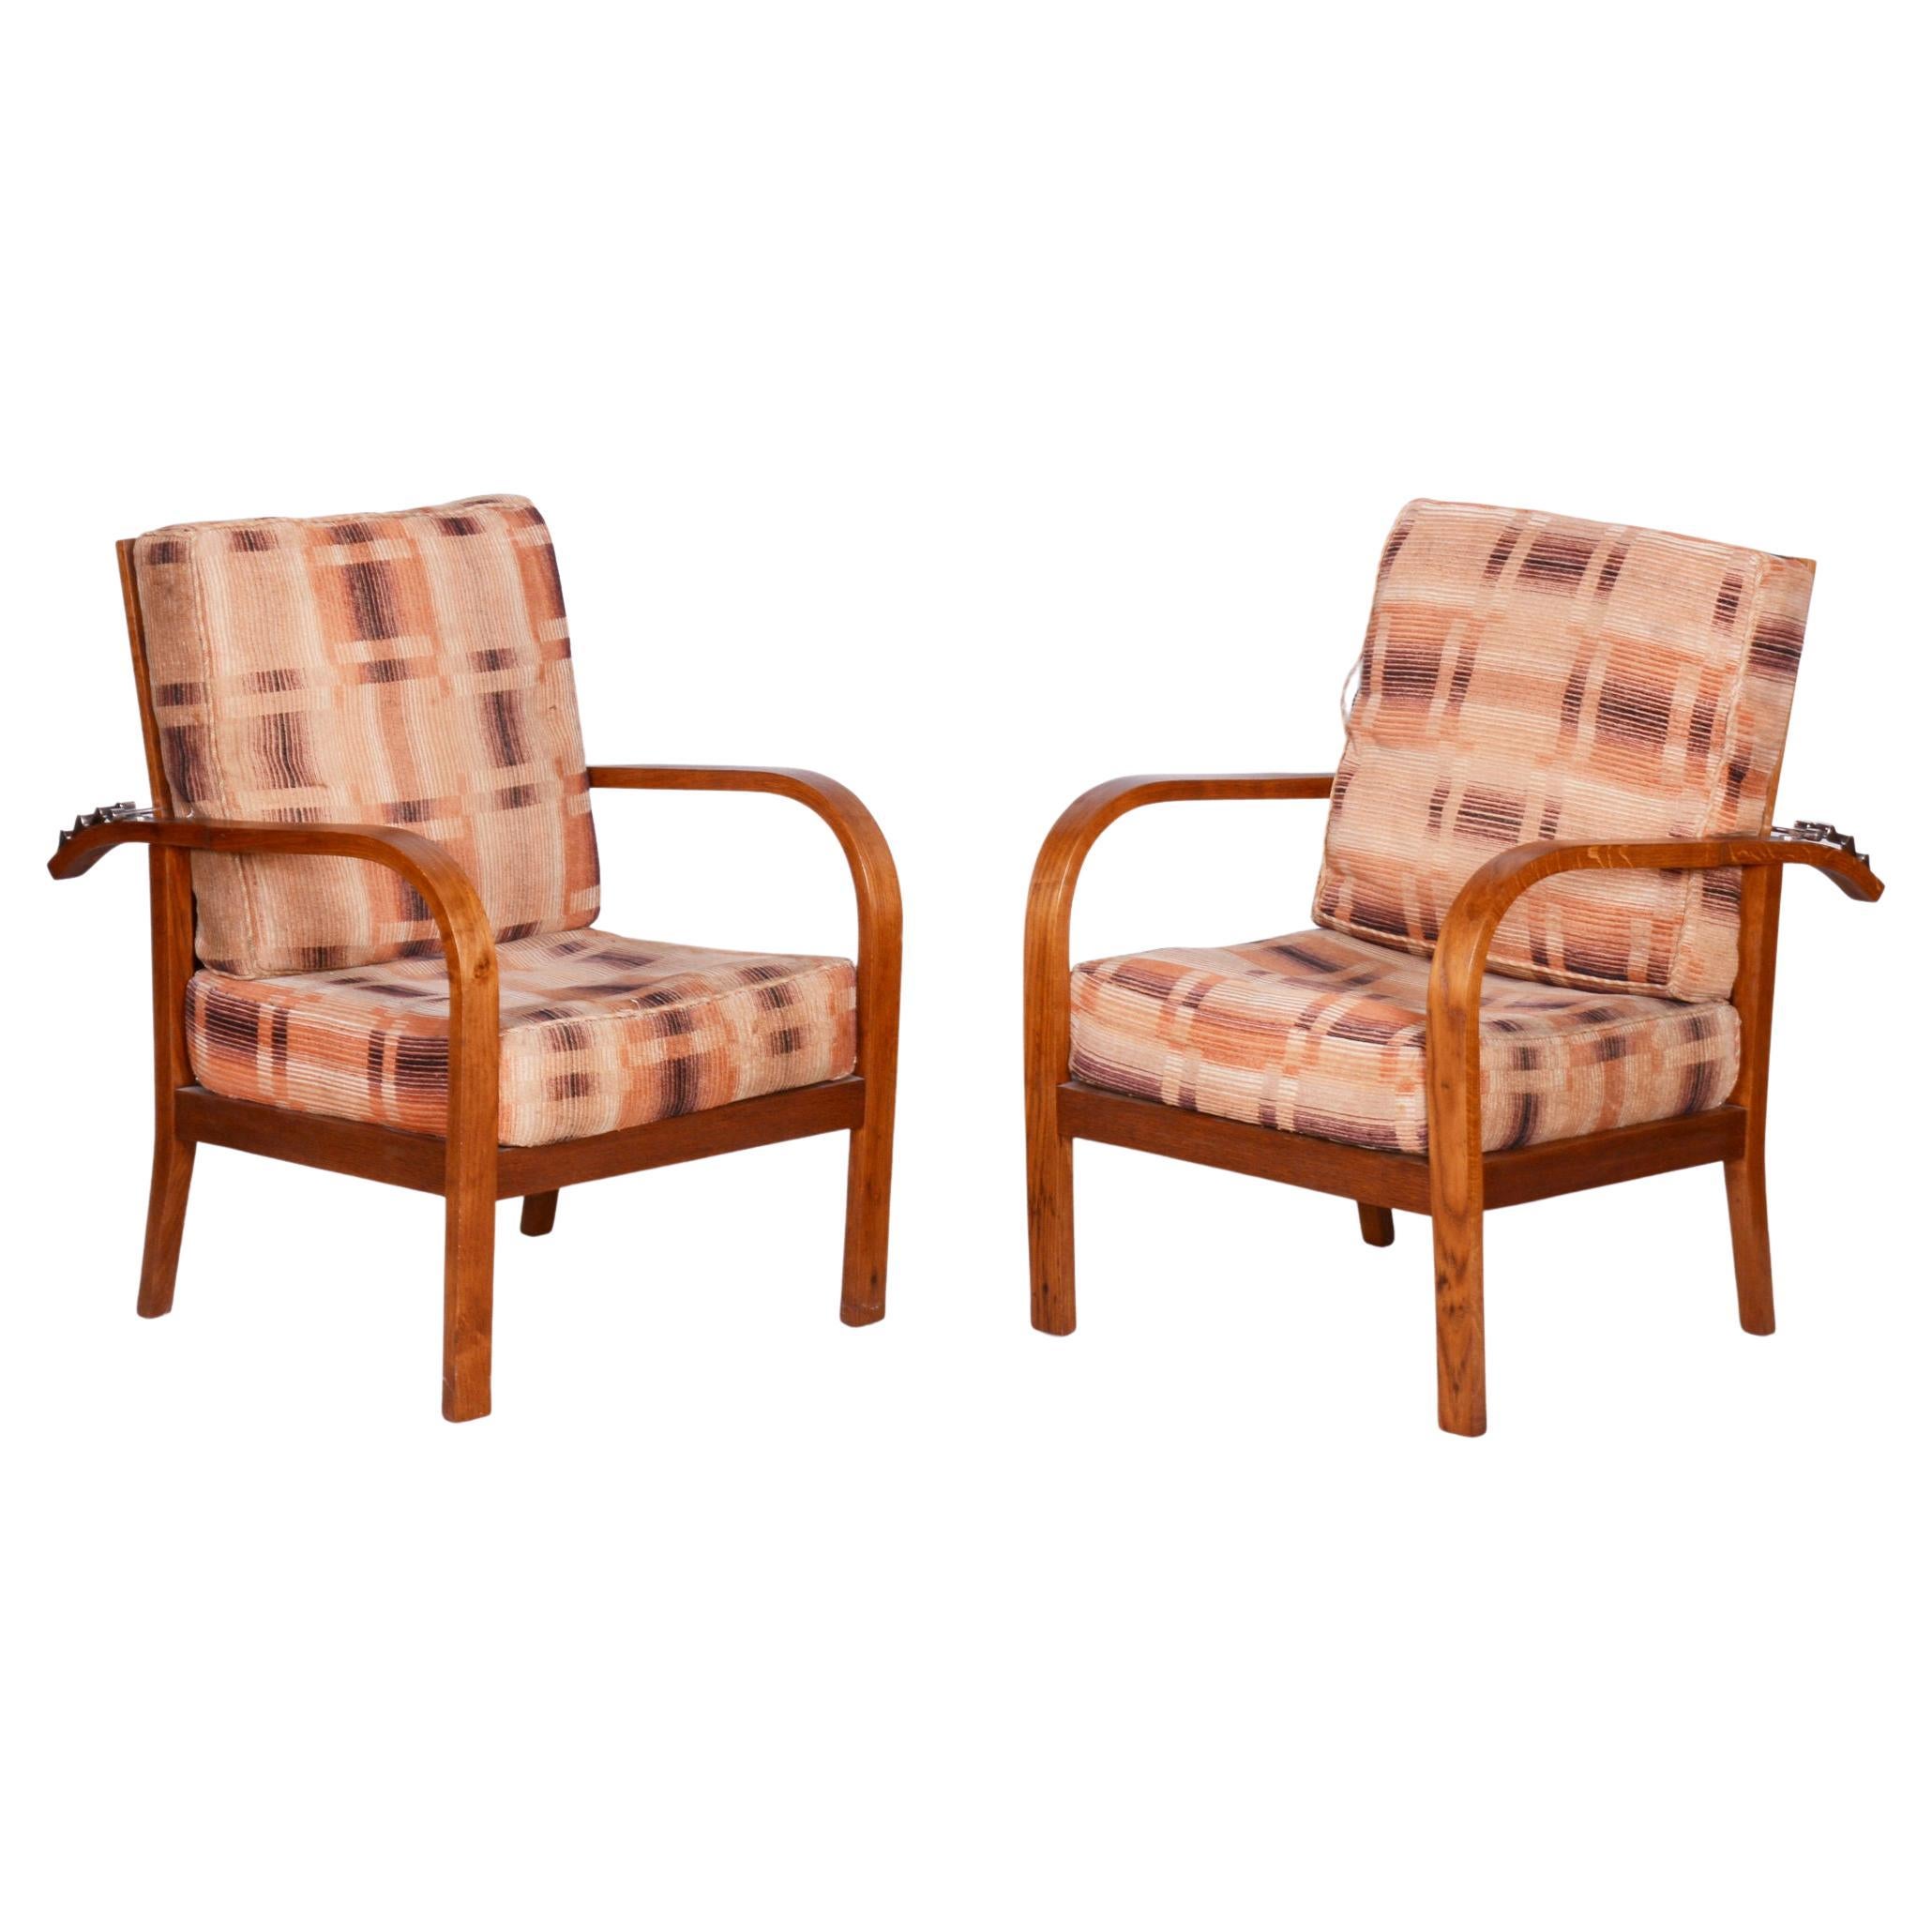 Restored ArtDeco Pair of Reclining Chairs, J. Halabala, Oak, Czechia, 1930s For Sale